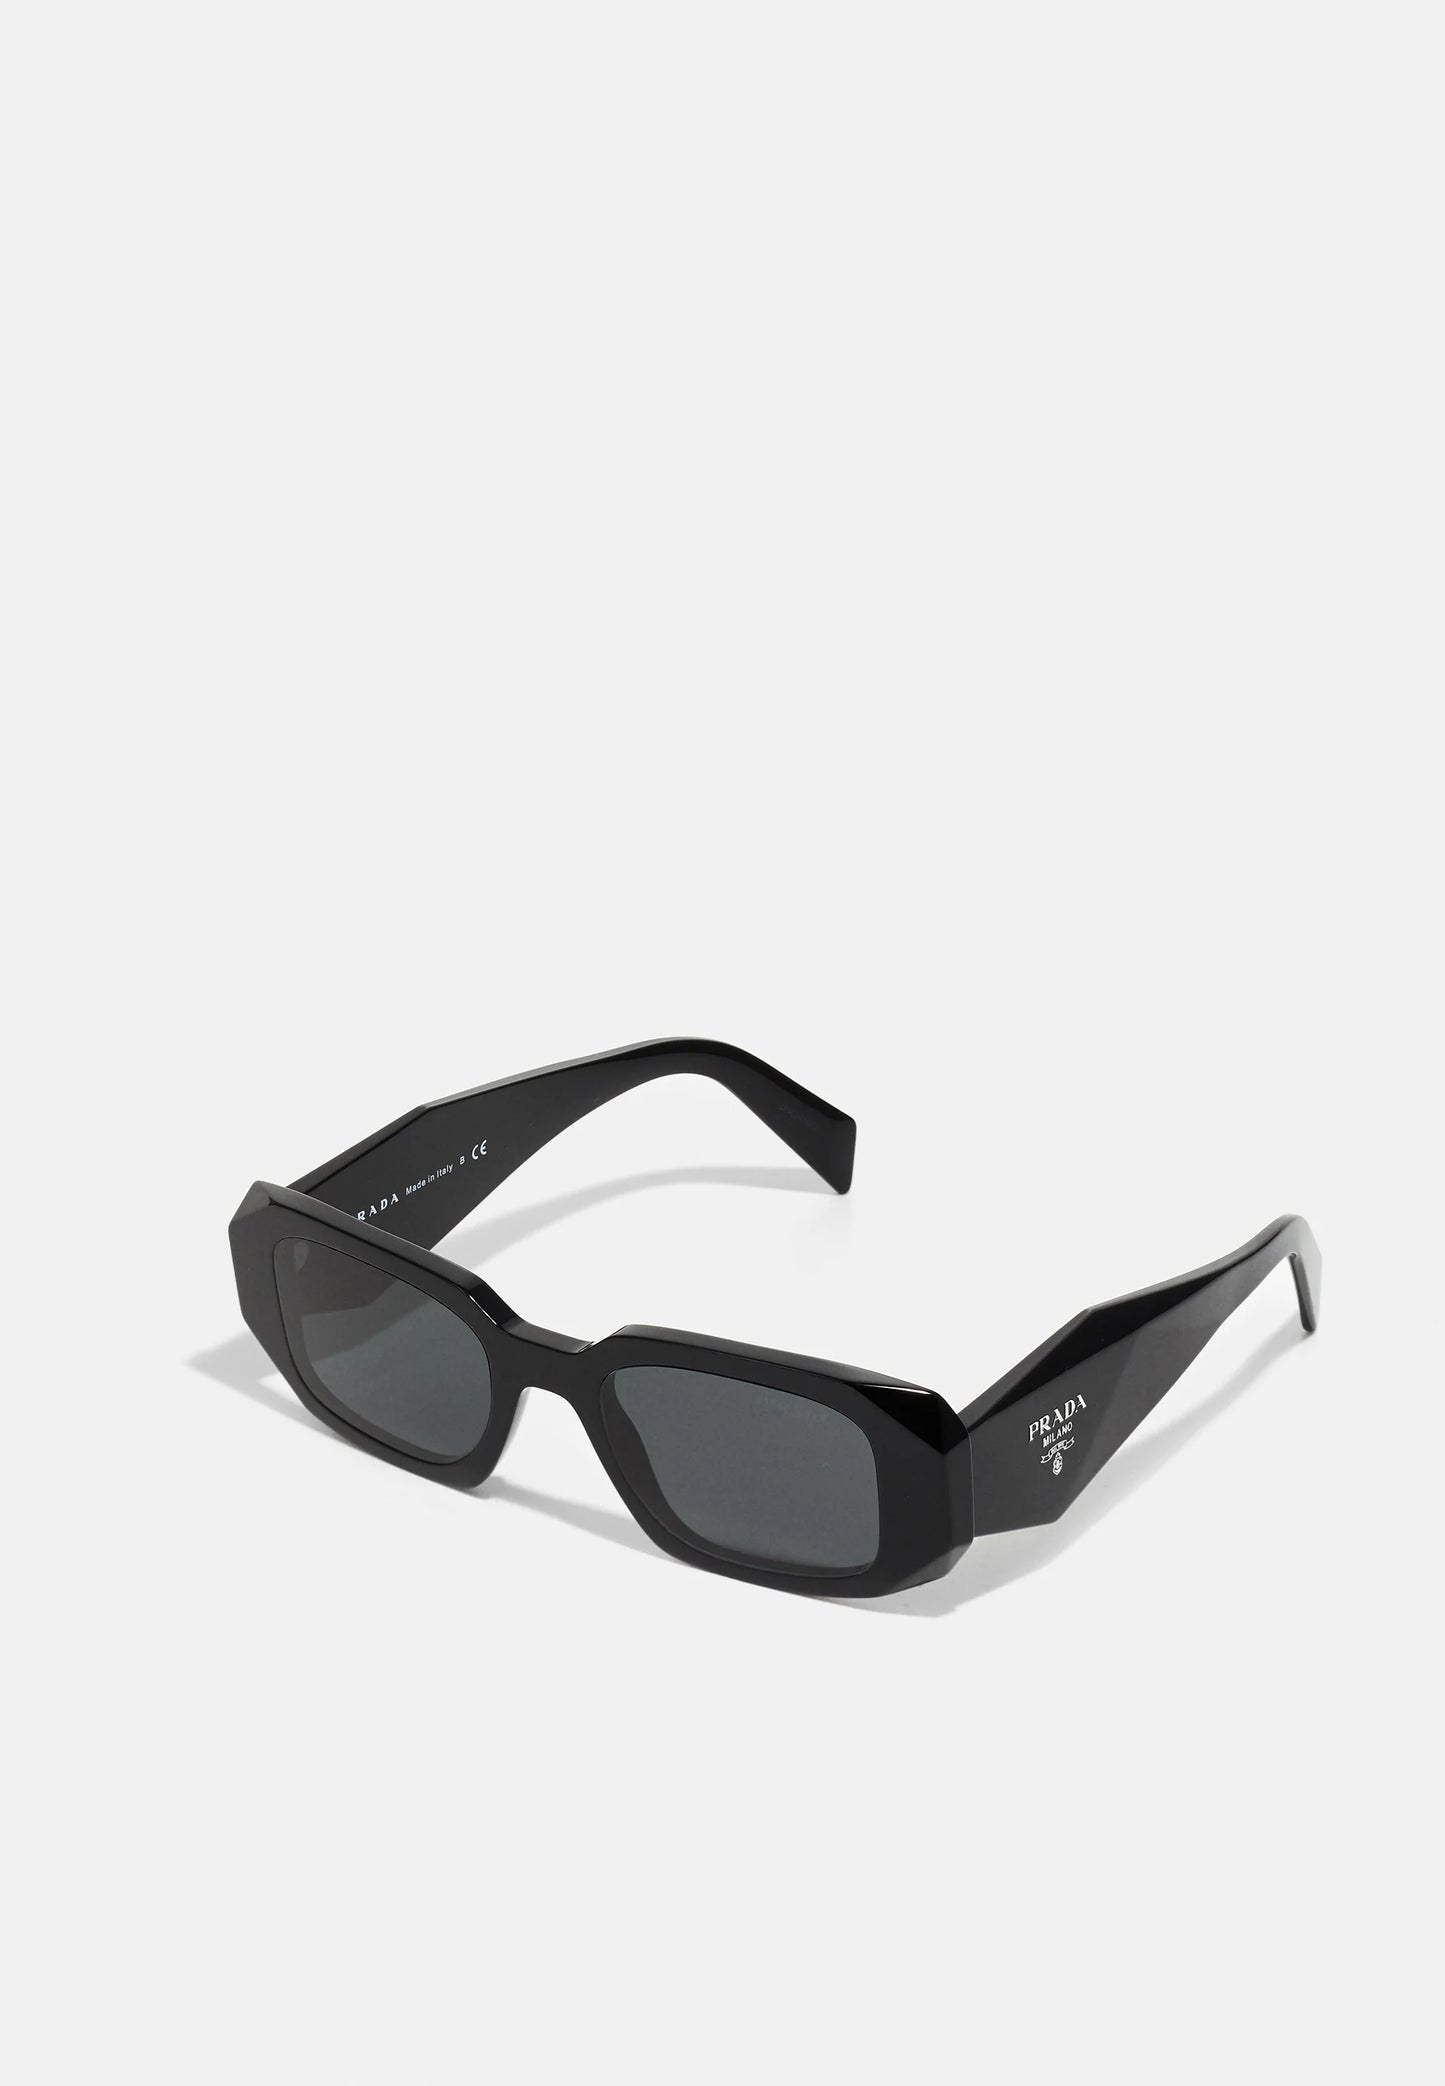 Prada PR 17WS Sunglasses Black